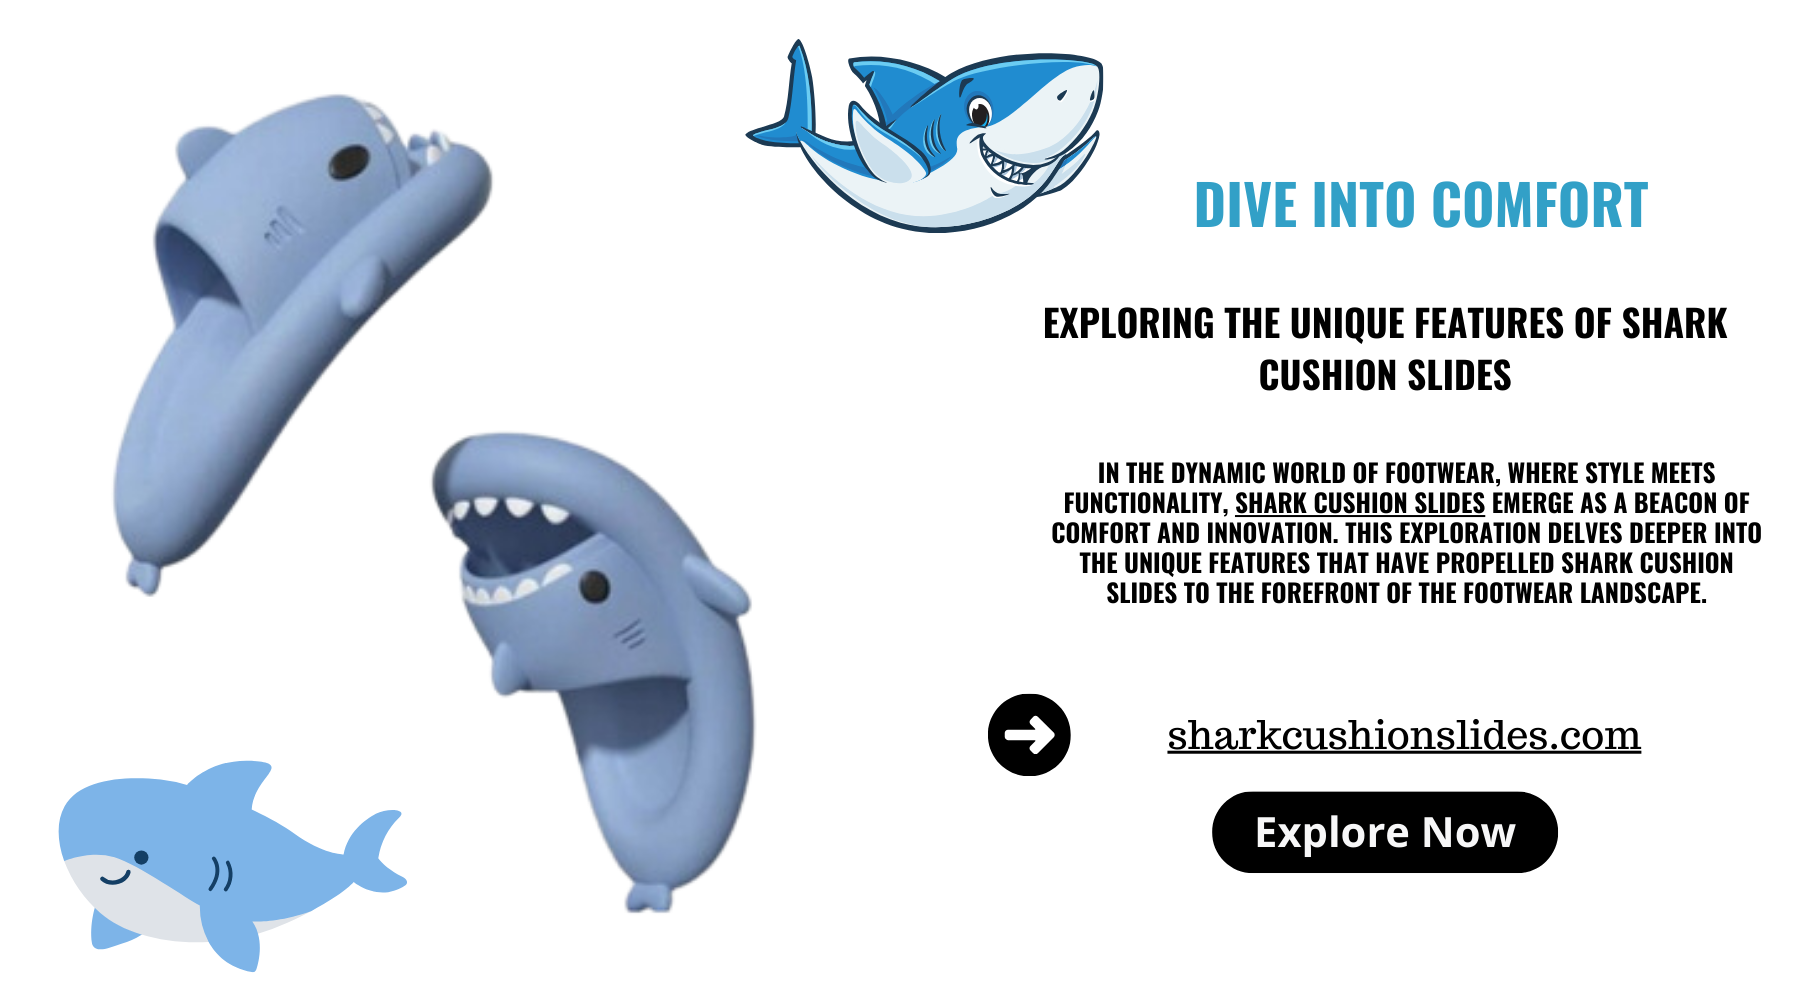 Dive into Comfort: Exploring the Unique Features of Shark Cushion Slides